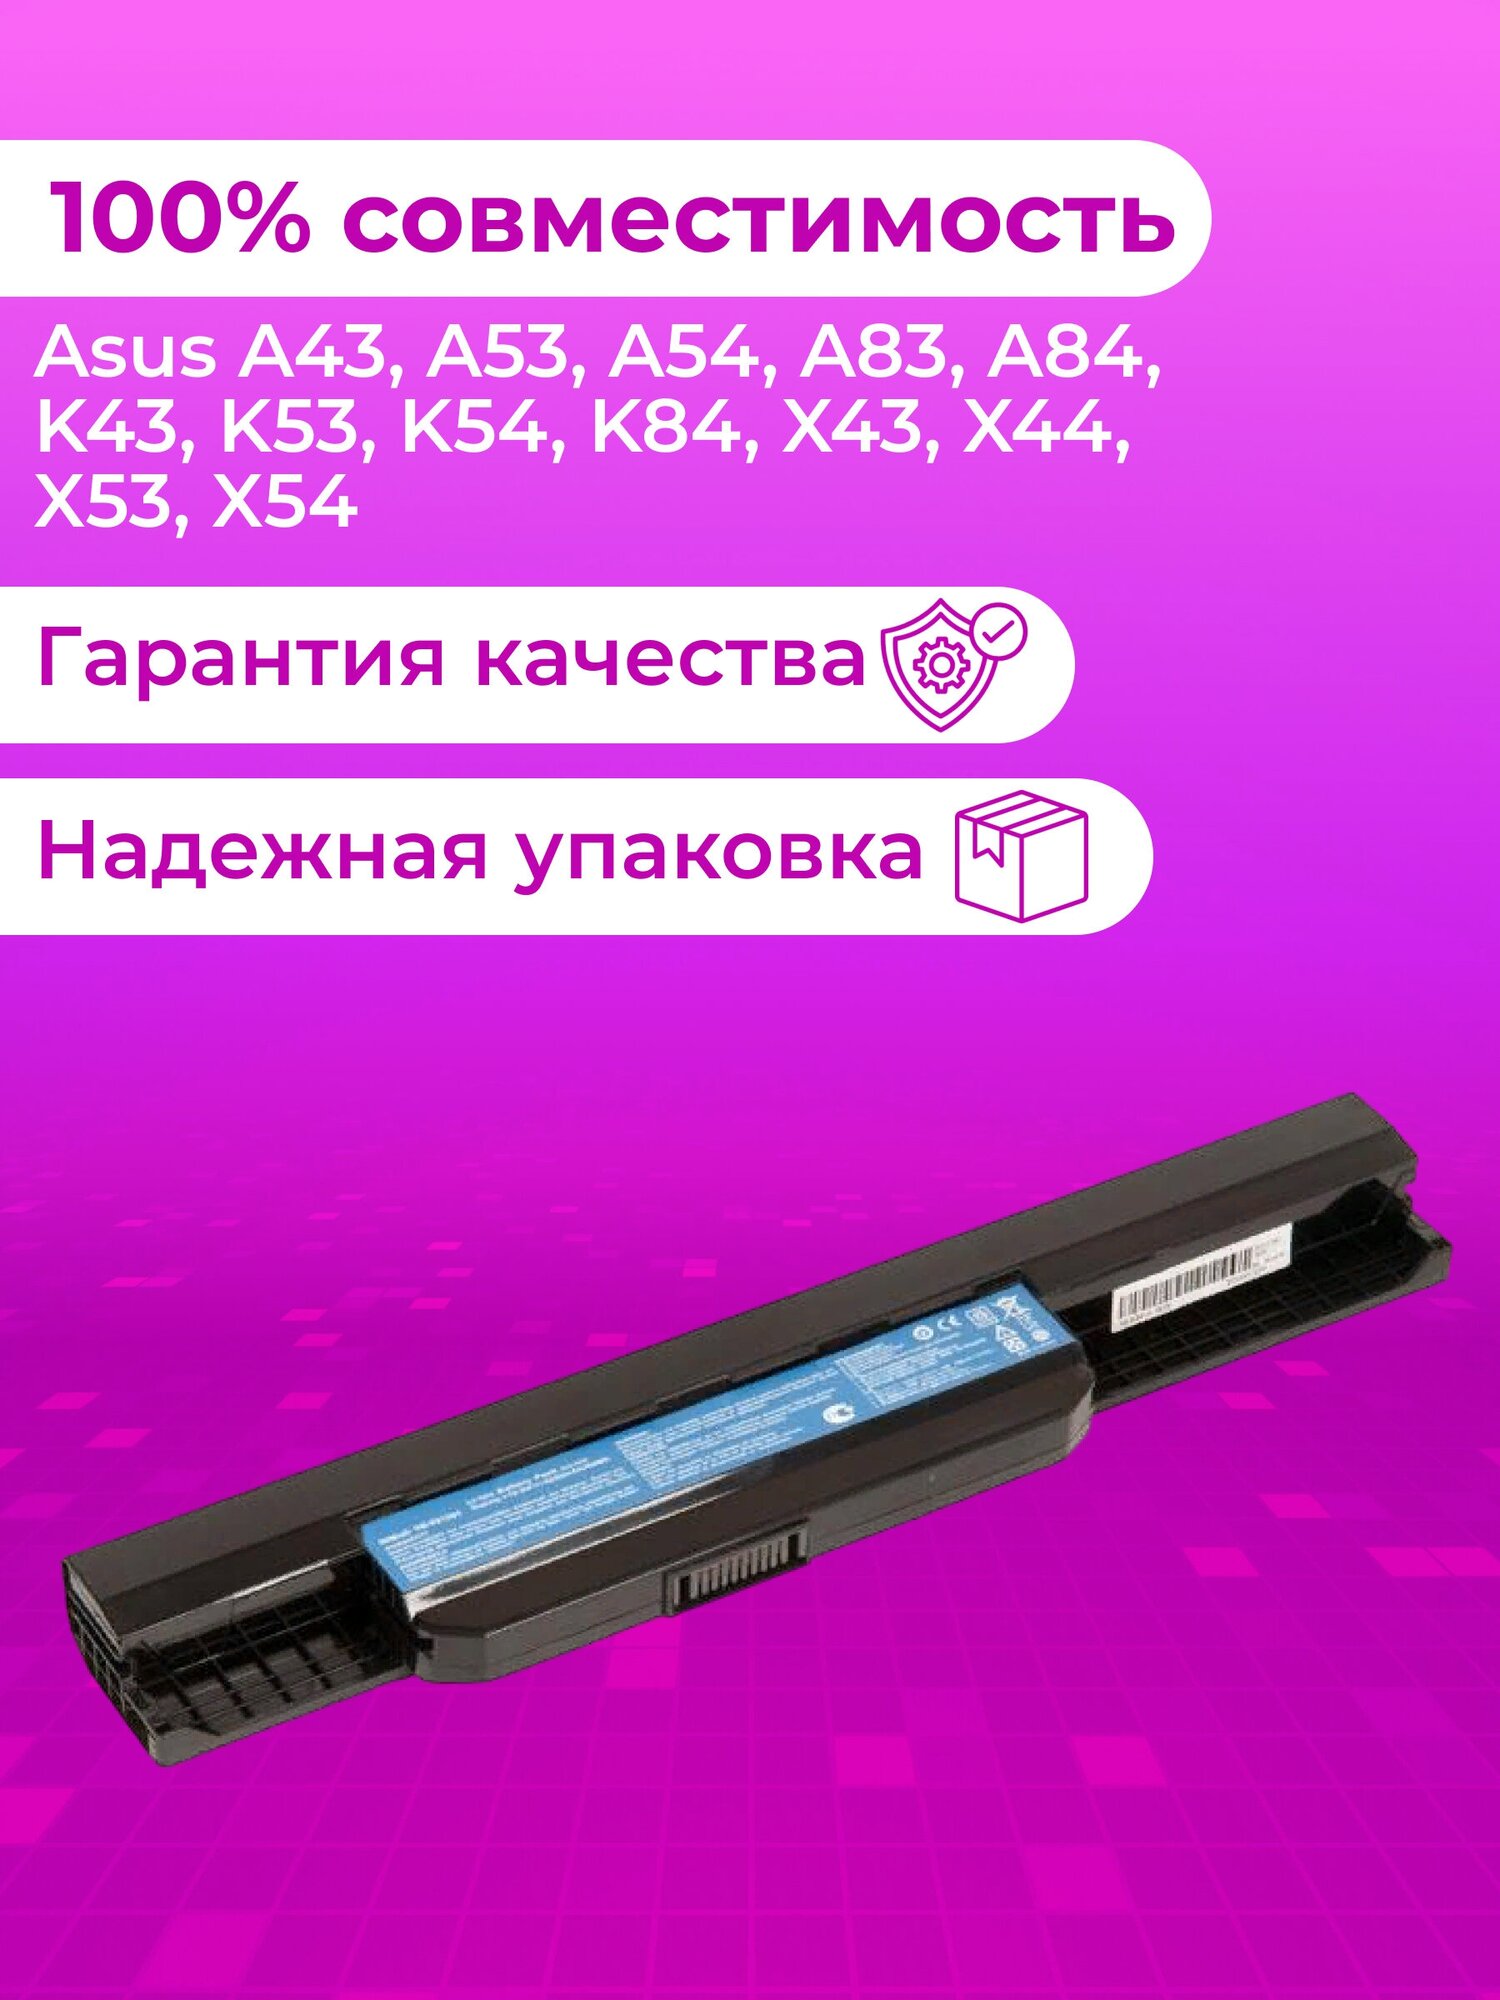 Аккумулятор для Asus A43 A53 K43 K53 X43 X44 X53 X54 5200mAh 108V OEM